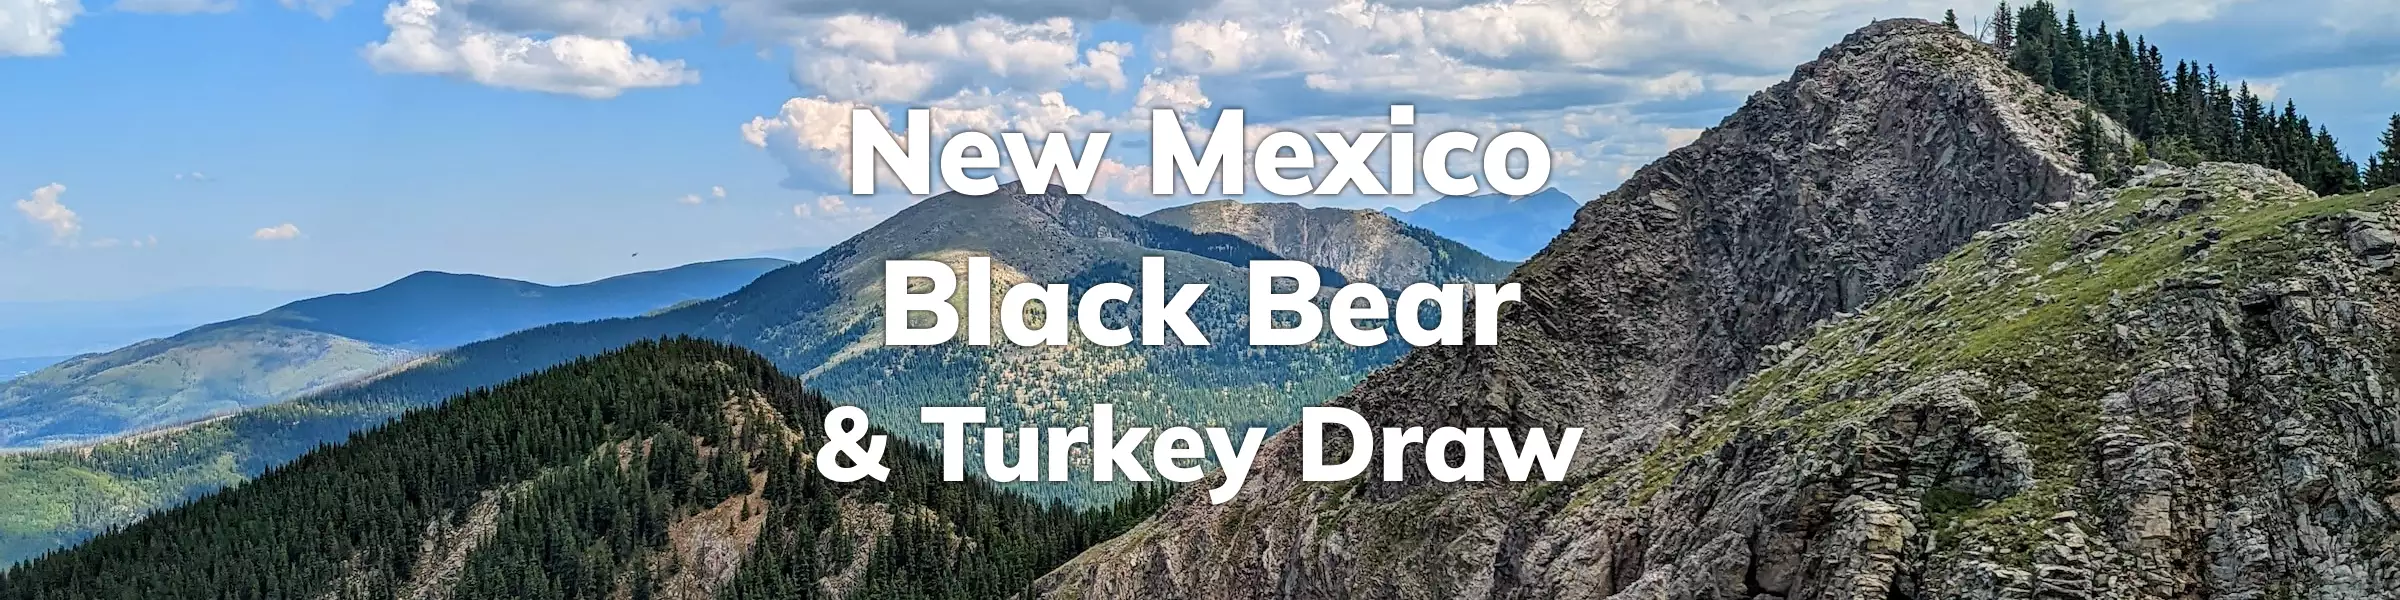 New Mexico Black Bear Turkey Draw